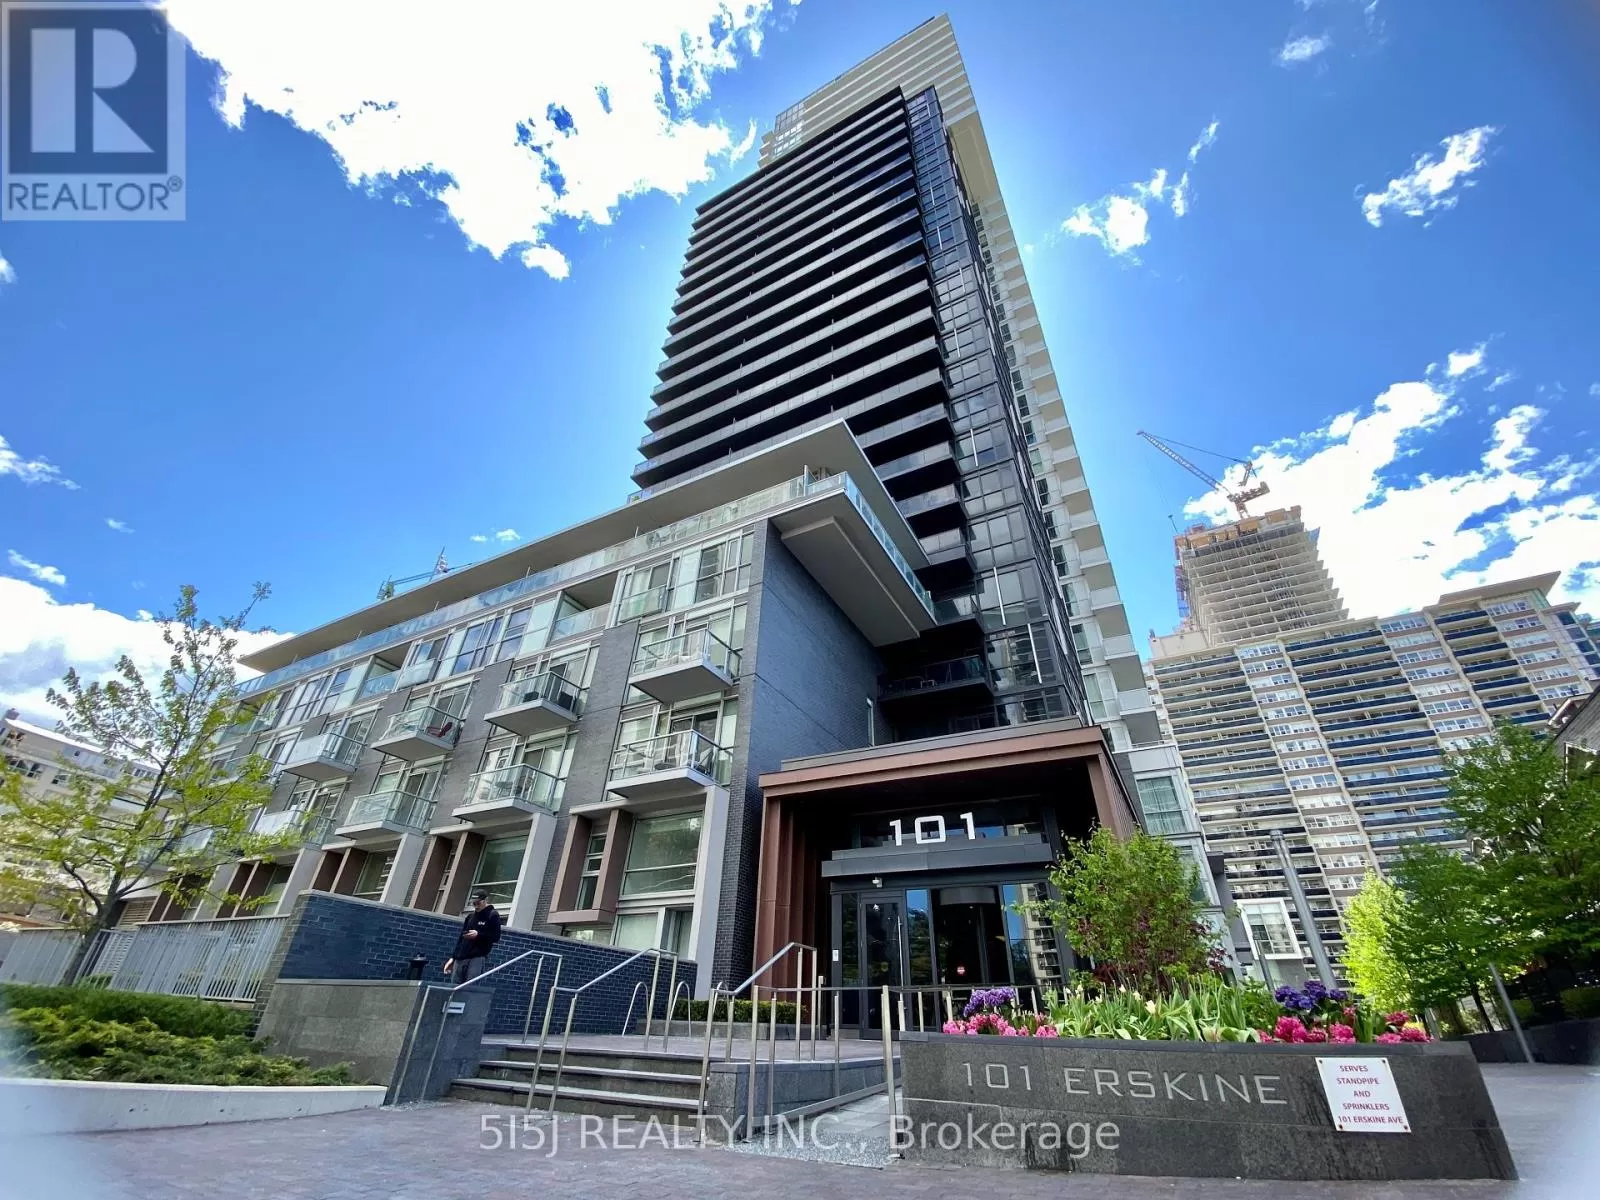 Apartment for rent: 1005 - 101 Erskine Avenue, Toronto, Ontario M4P 1Y5